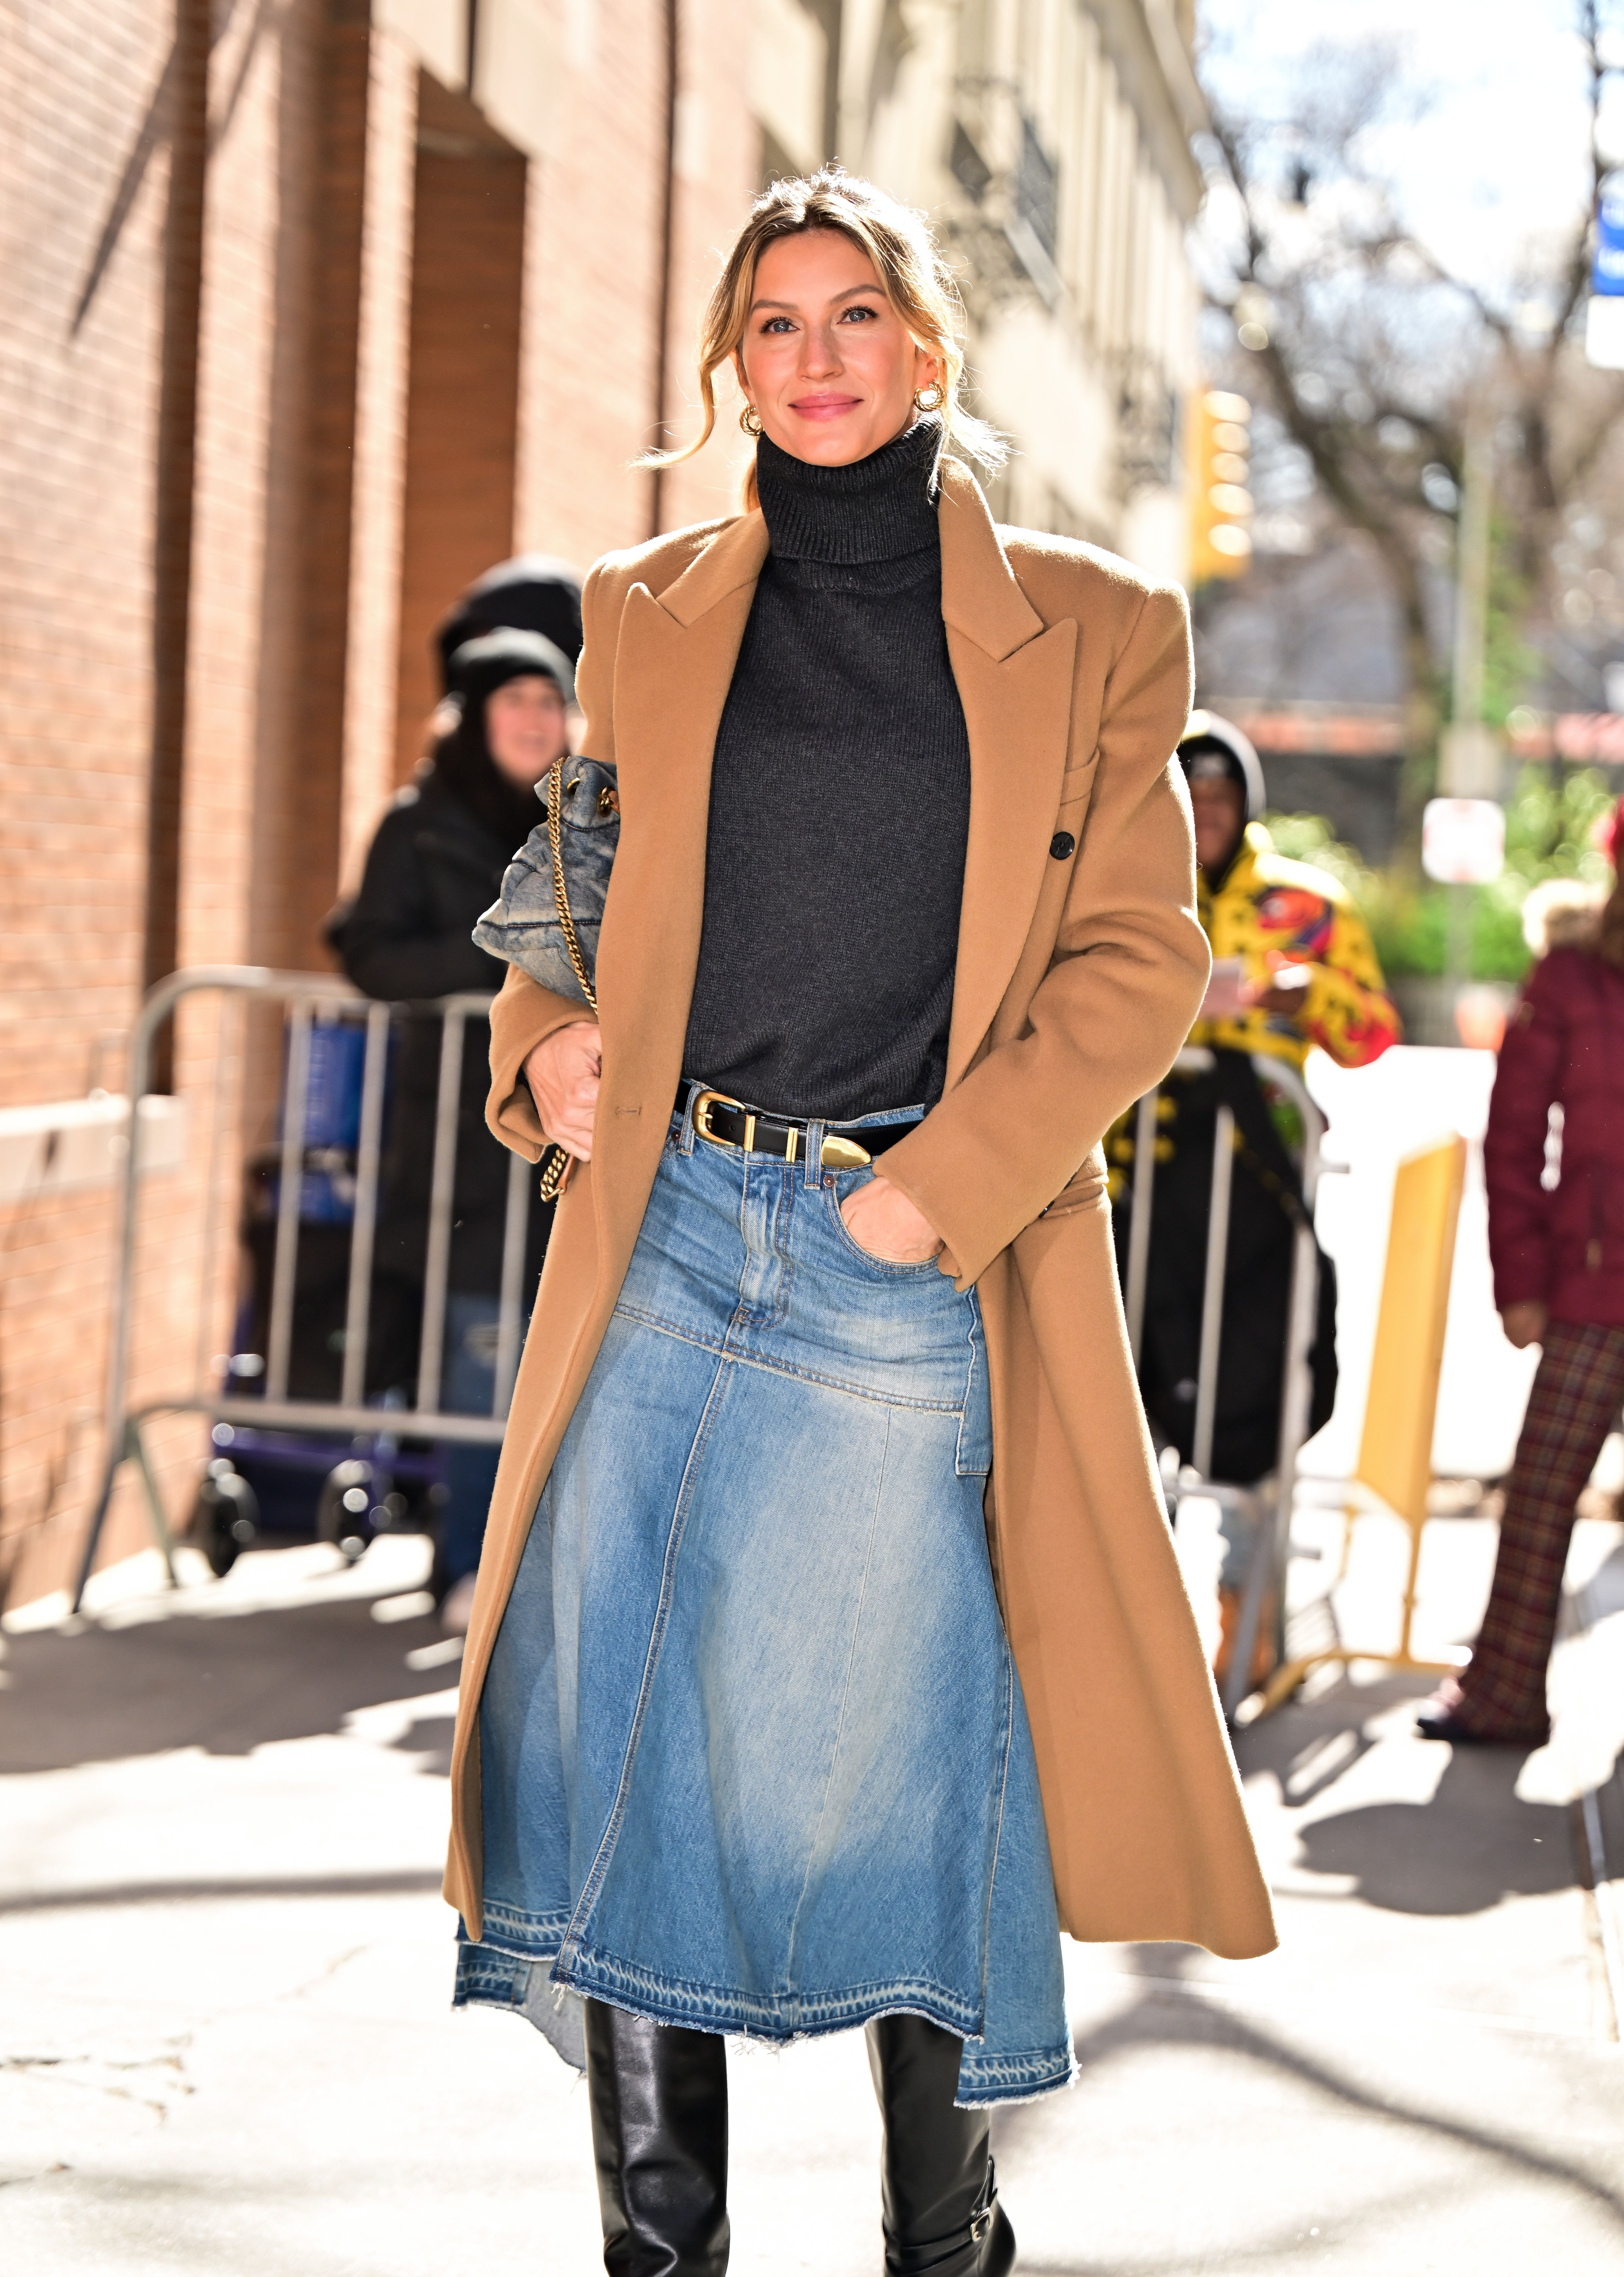 Lena Dunham announces plus-size fashion range: 'There's so much